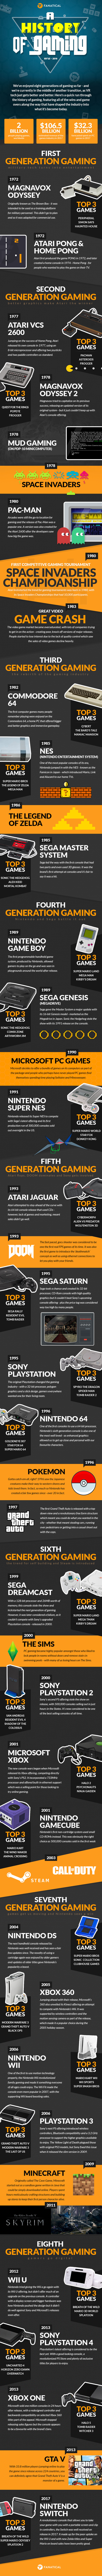 Fanatical-historyofgaming The History of Gaming ... [From Birth Till Today]